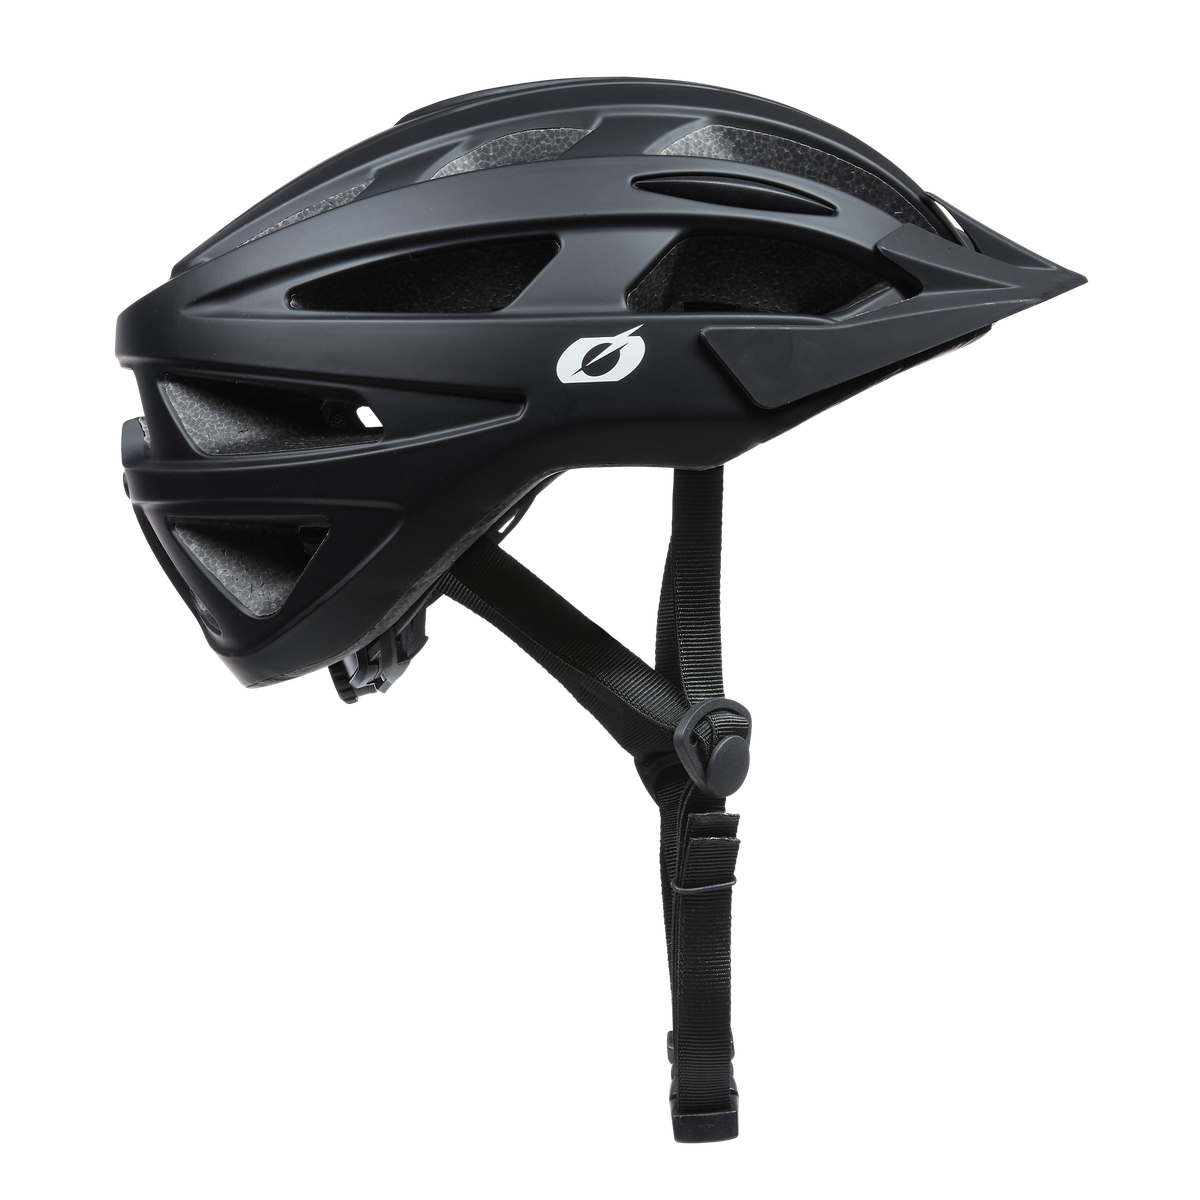 OUTCAST Helmet PLAIN V.22 black XS/S/M (52-58 cm) – AVAILABLE IN SELECTED BIKE SHOPS